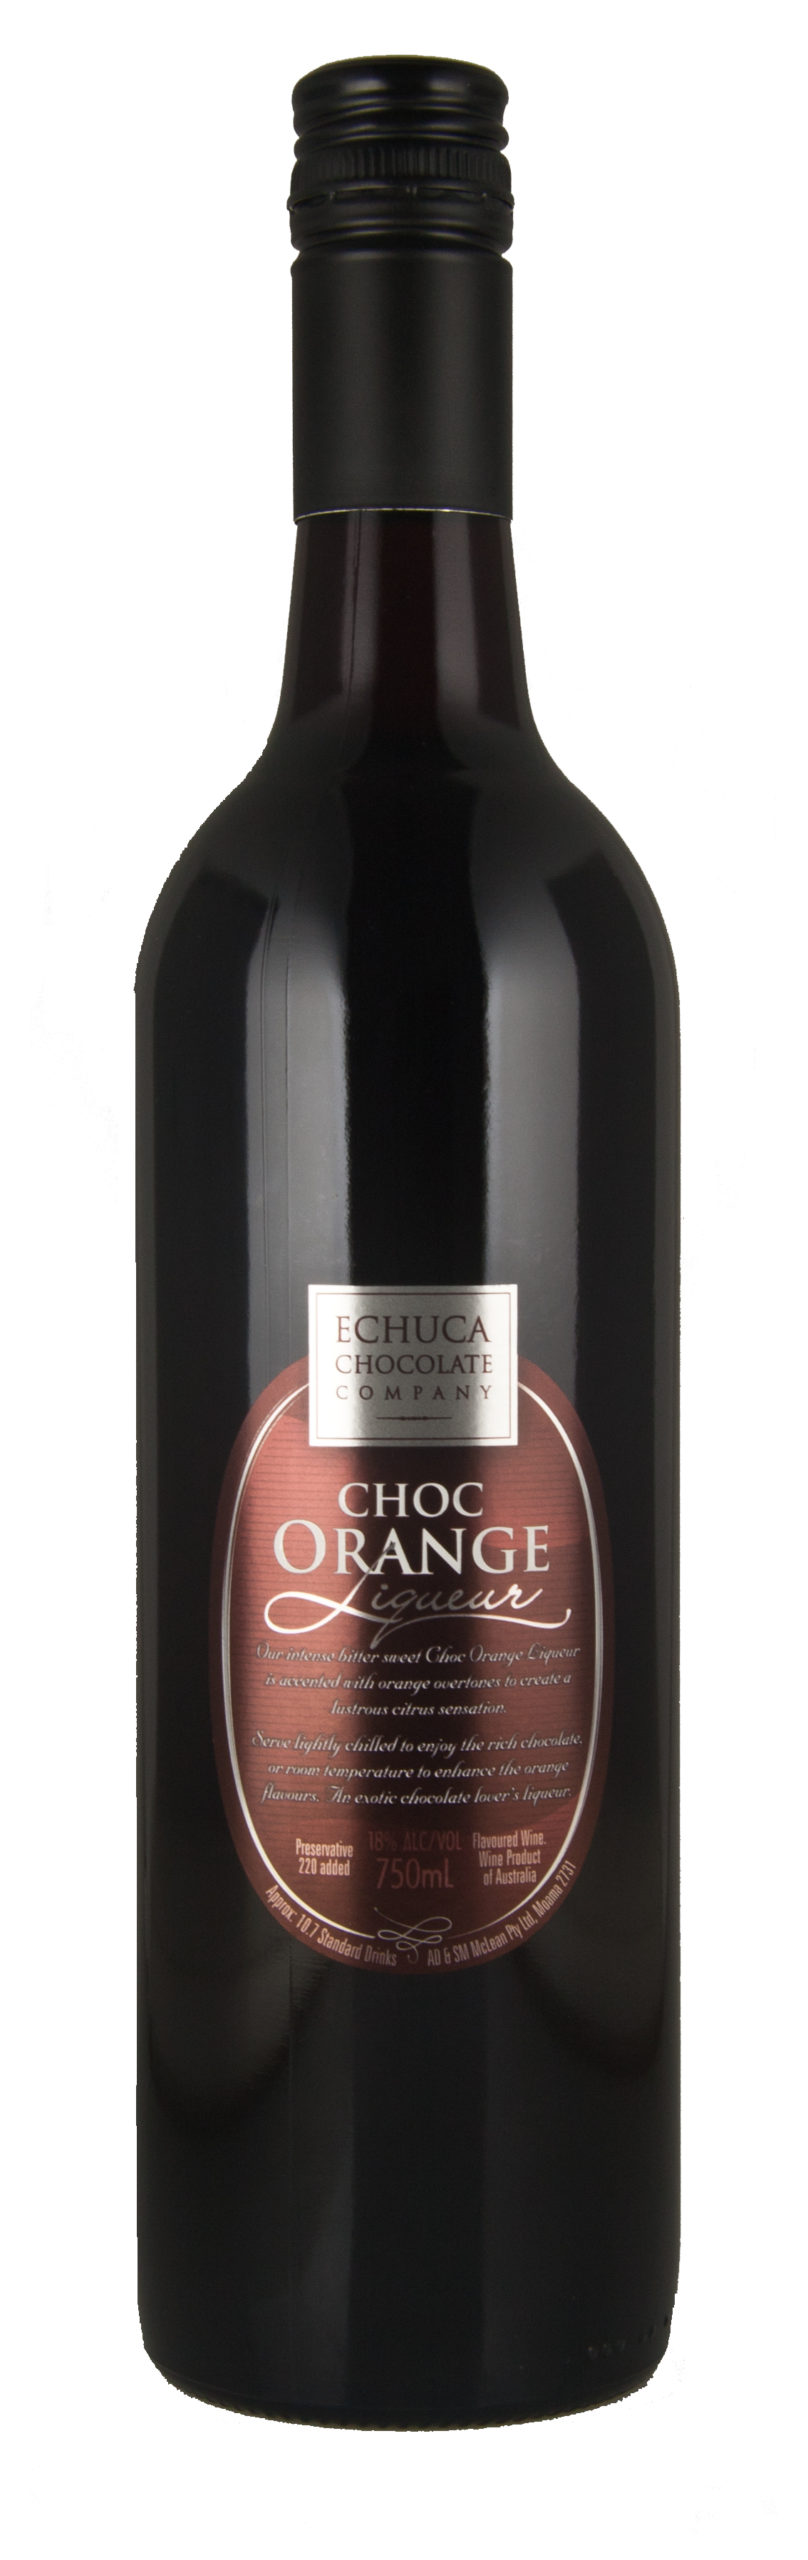 Choc Orange Liqueur from Echuca Chocolate Company